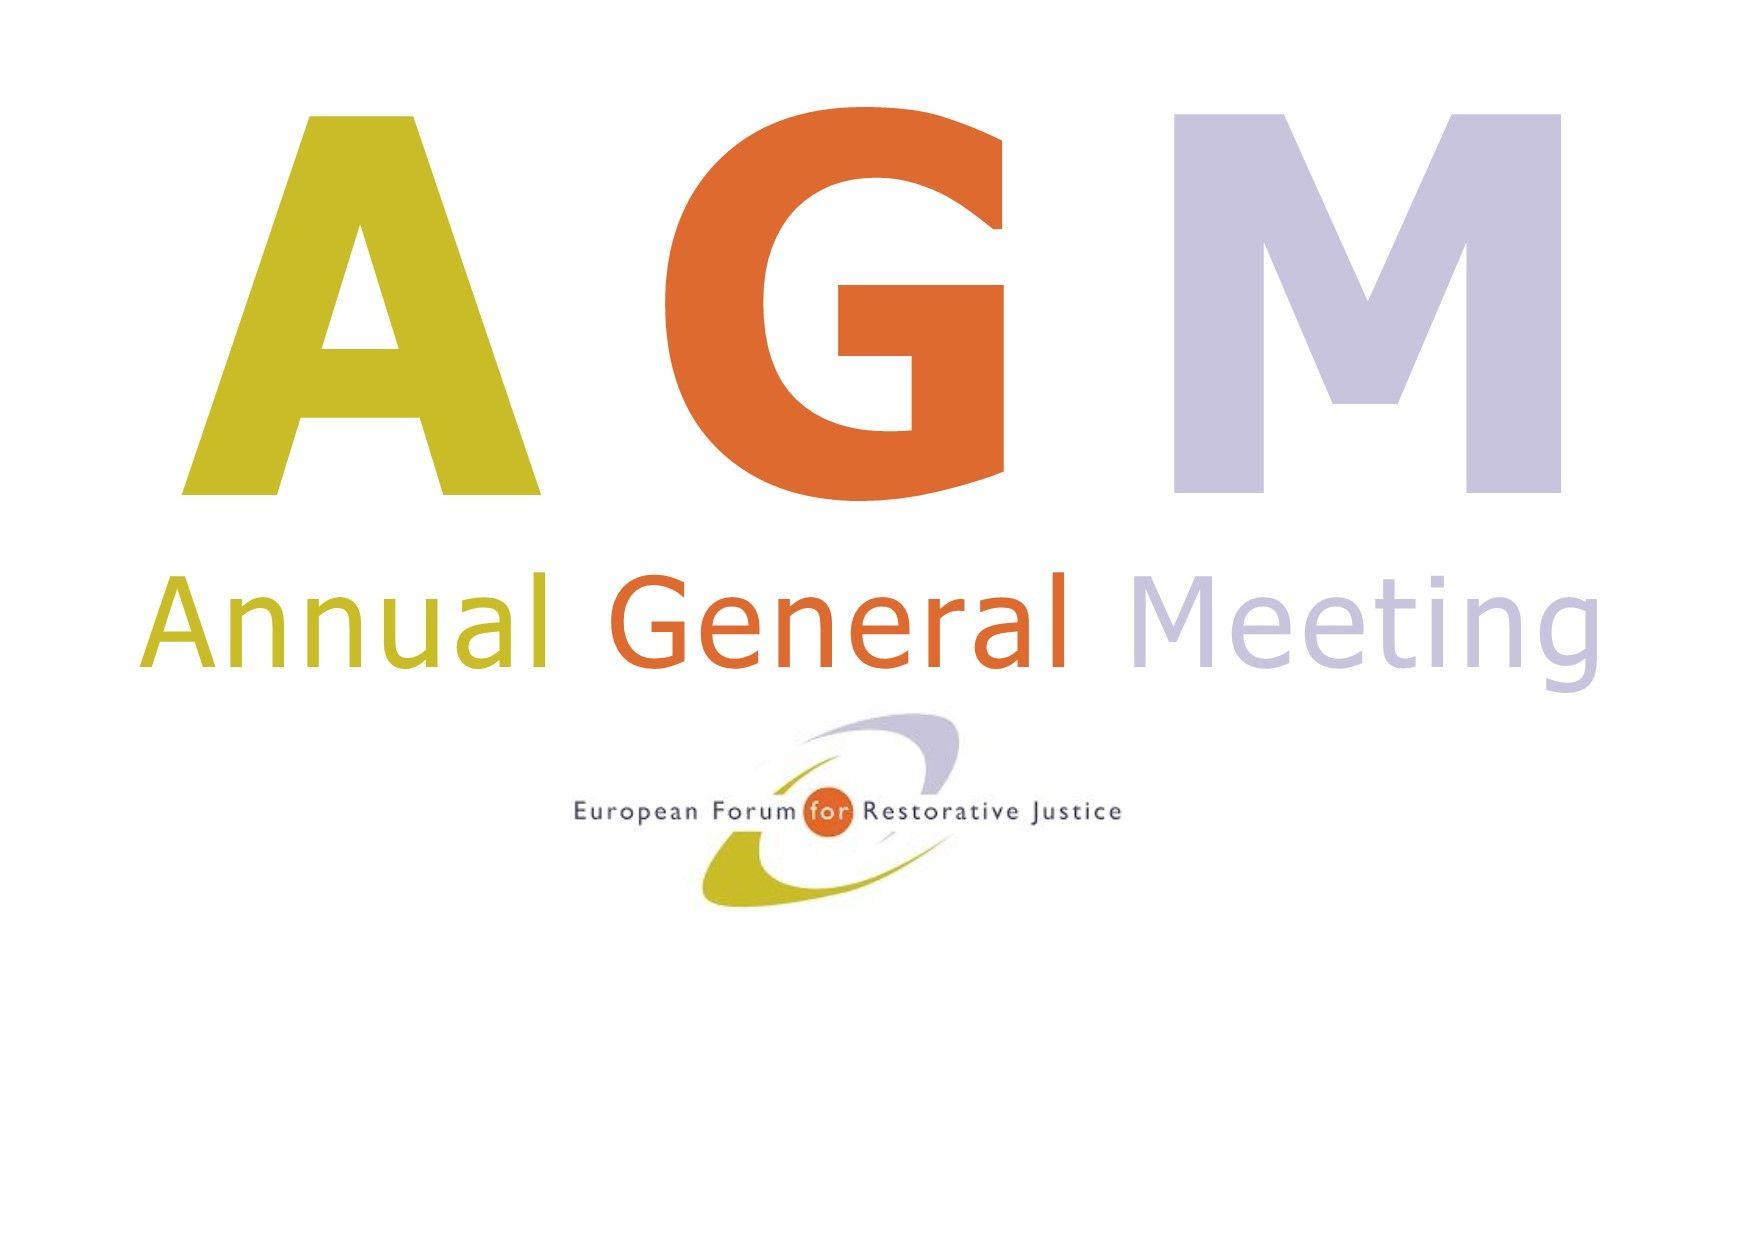 AGM Logo - AGM logo - European Forum for Restorative Justice